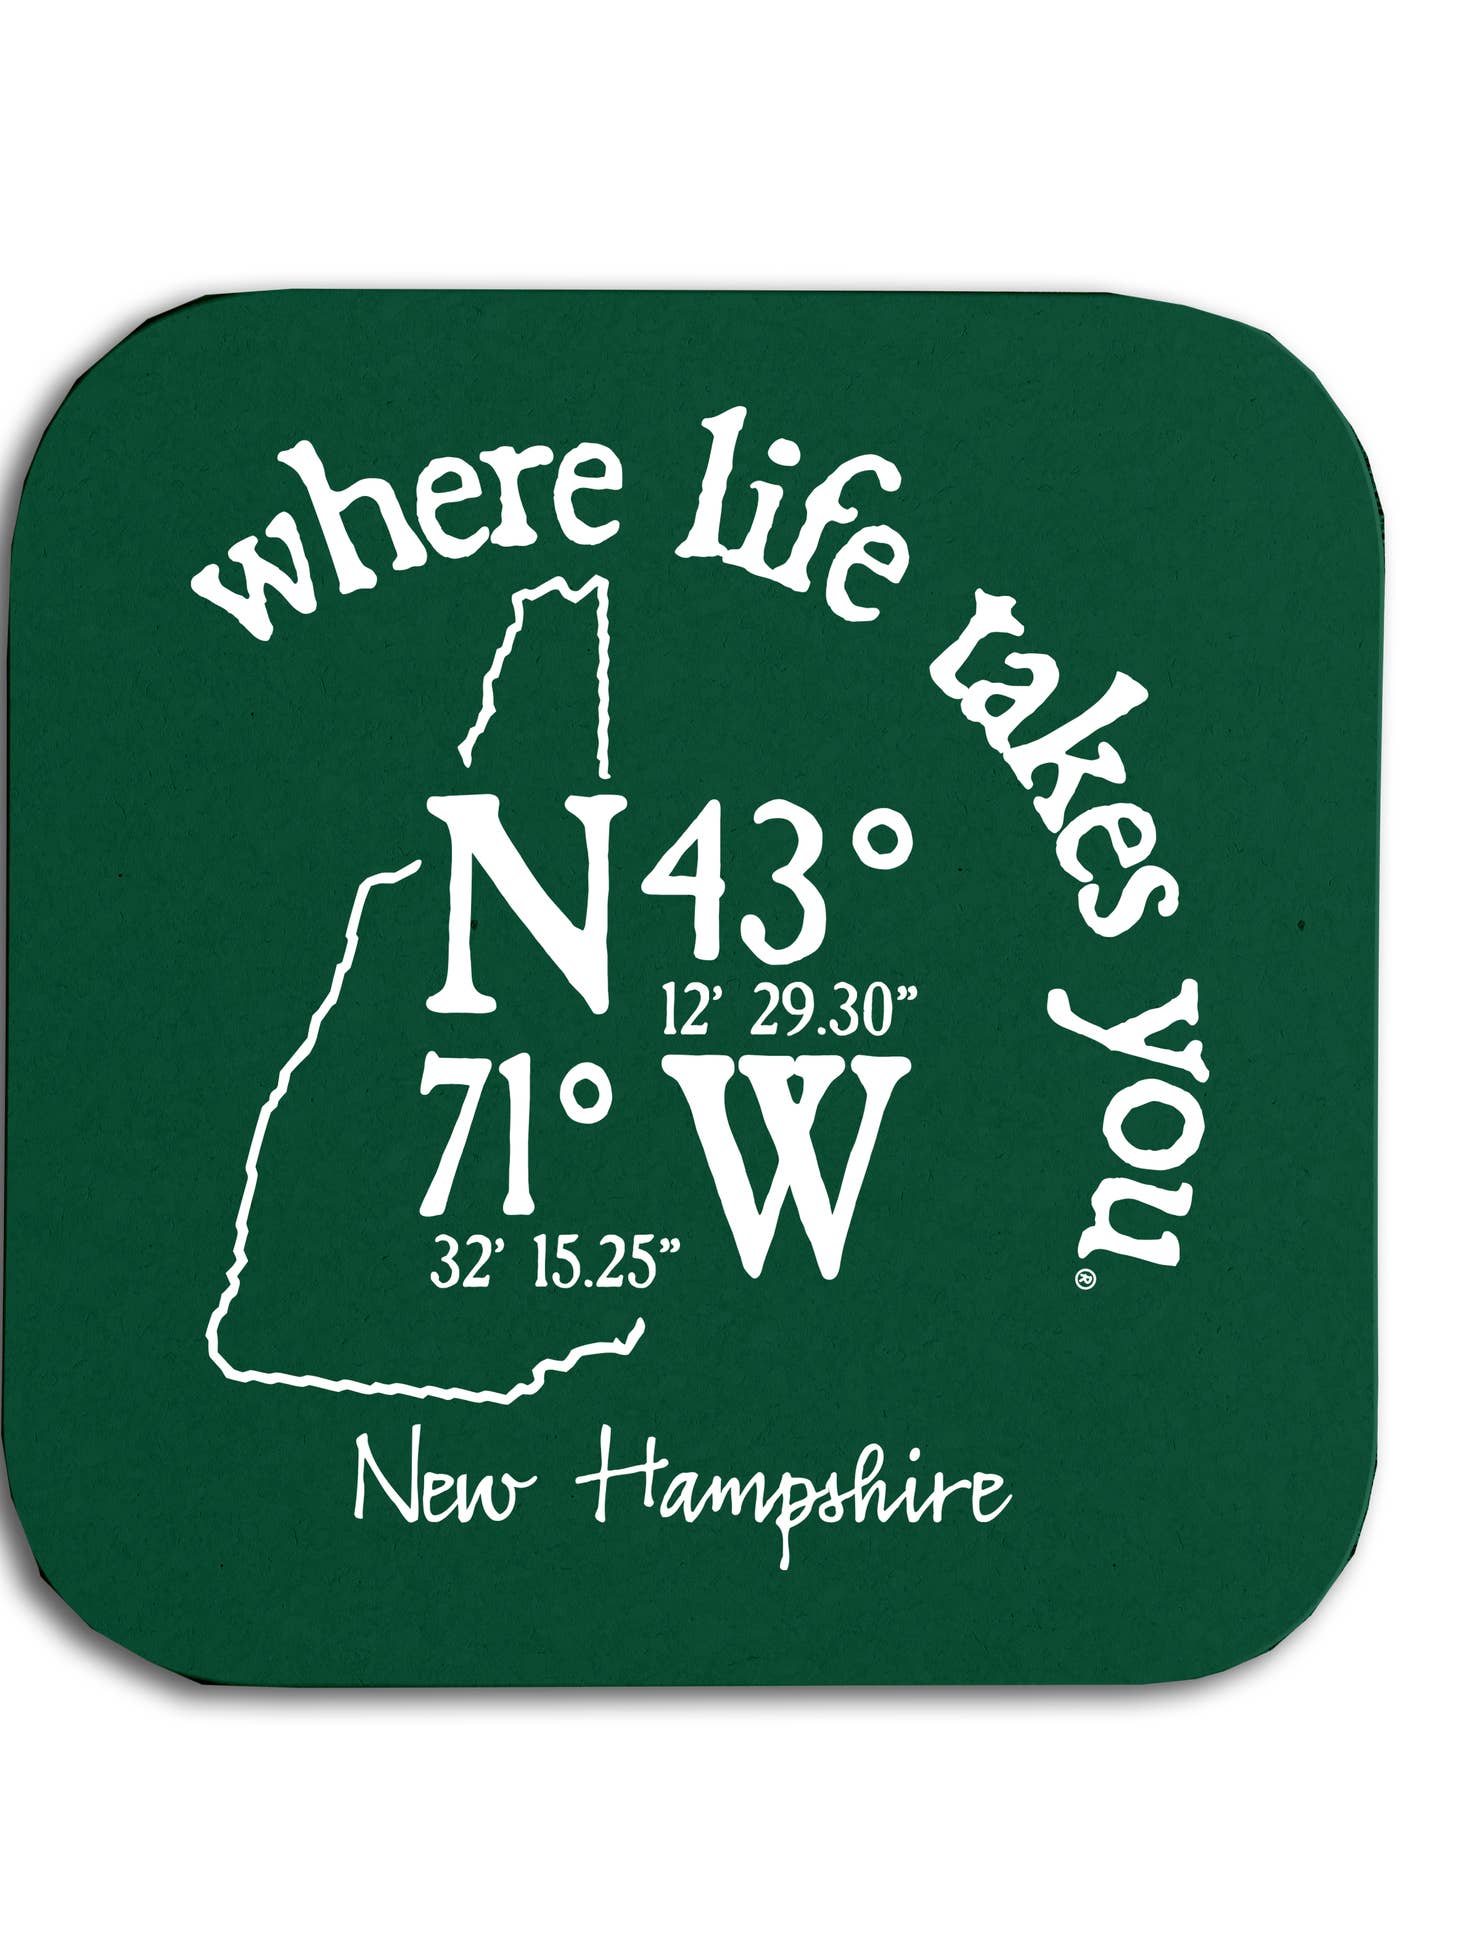 New Hampshire Coordinate Coaster - Where Life Takes You